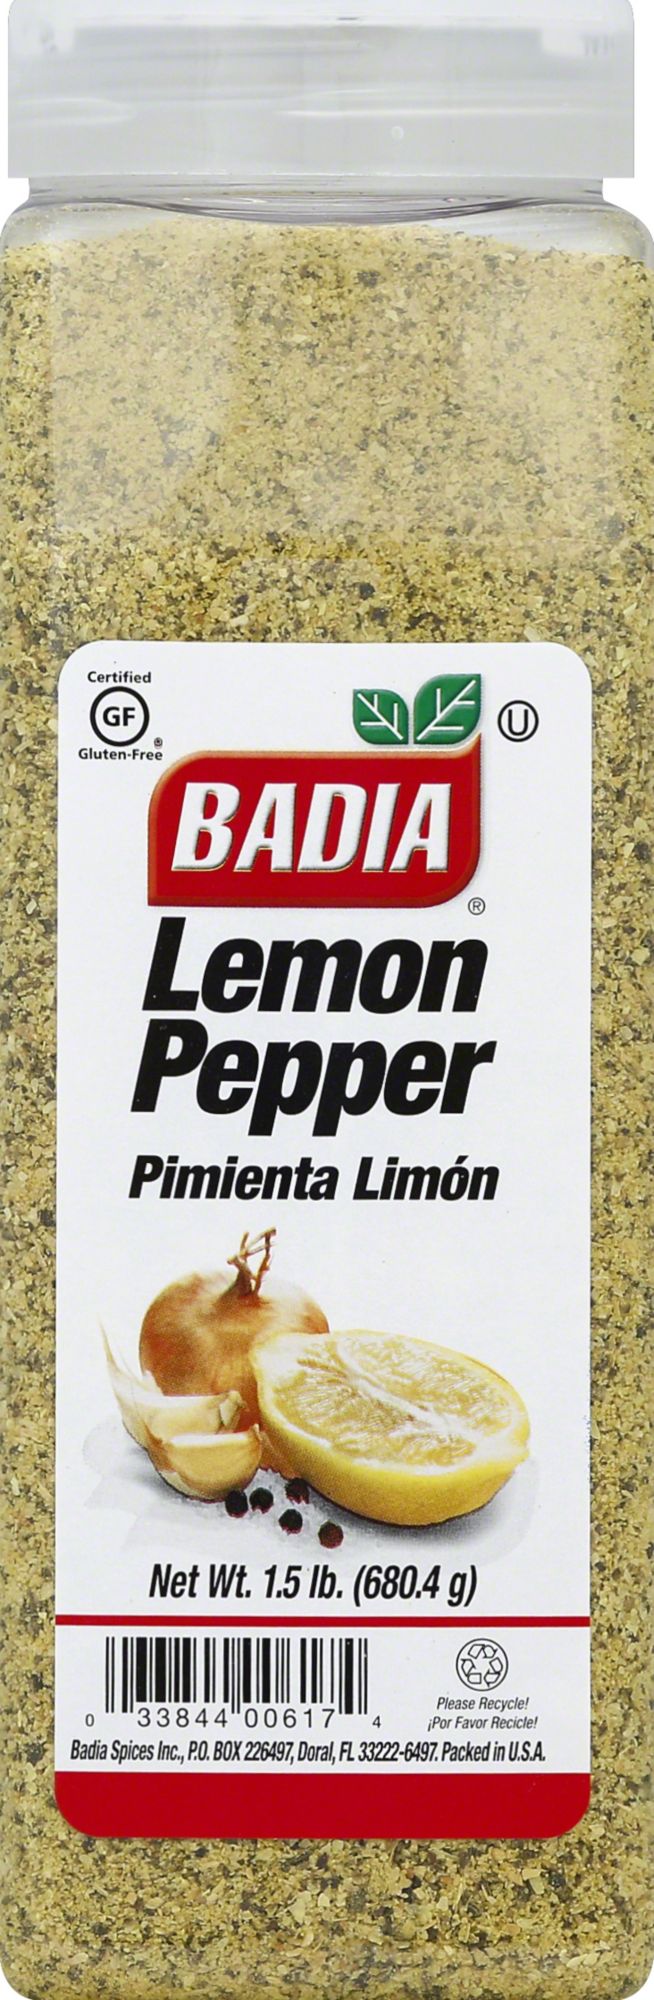 Badia Lime & Orange Citrus Pepper Bundle - Lime Pepper